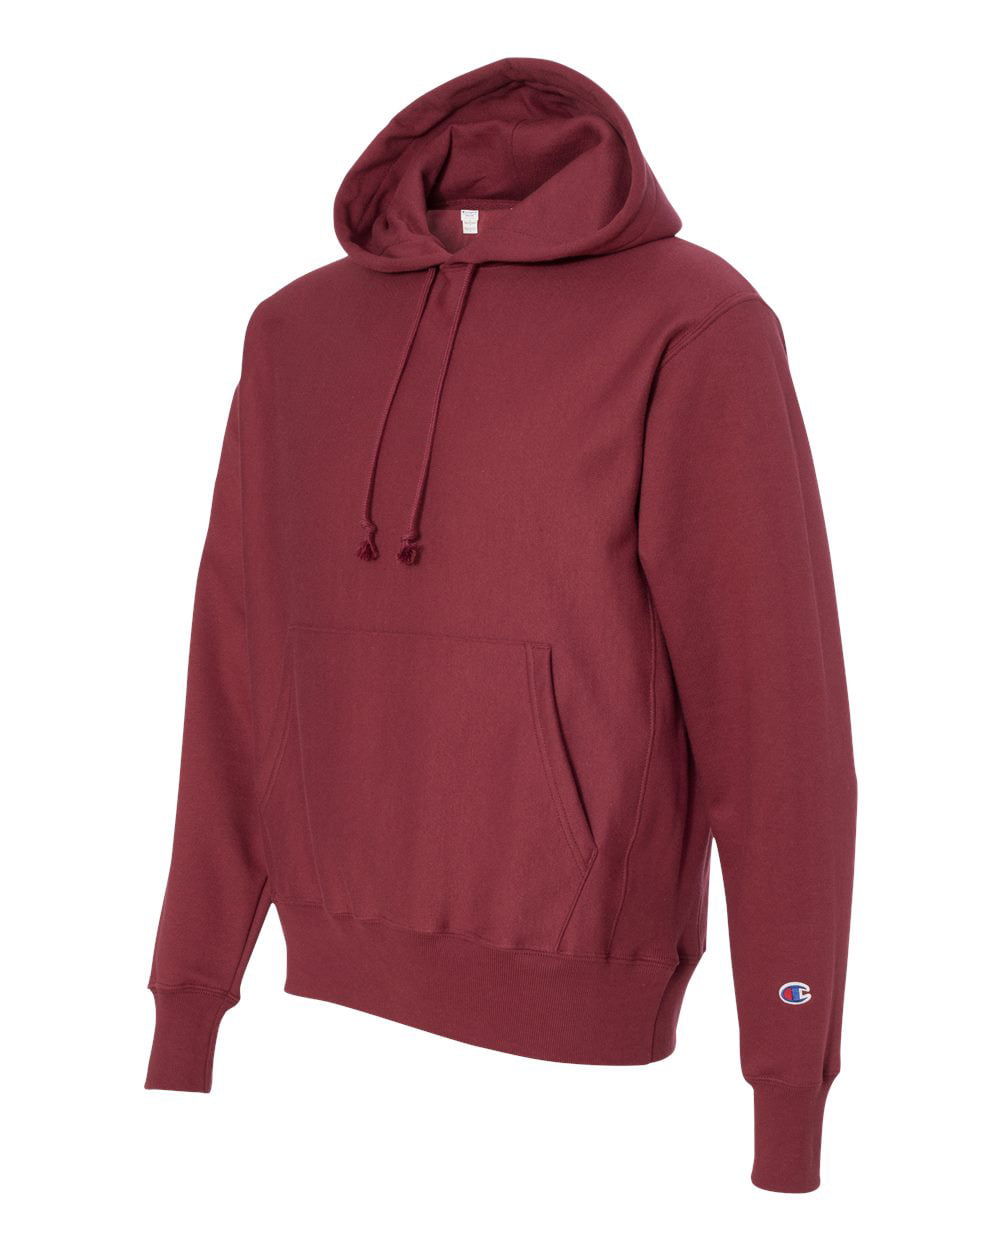 Champion - Reverse Weave Hooded Sweatshirt - S101 - Walmart.com